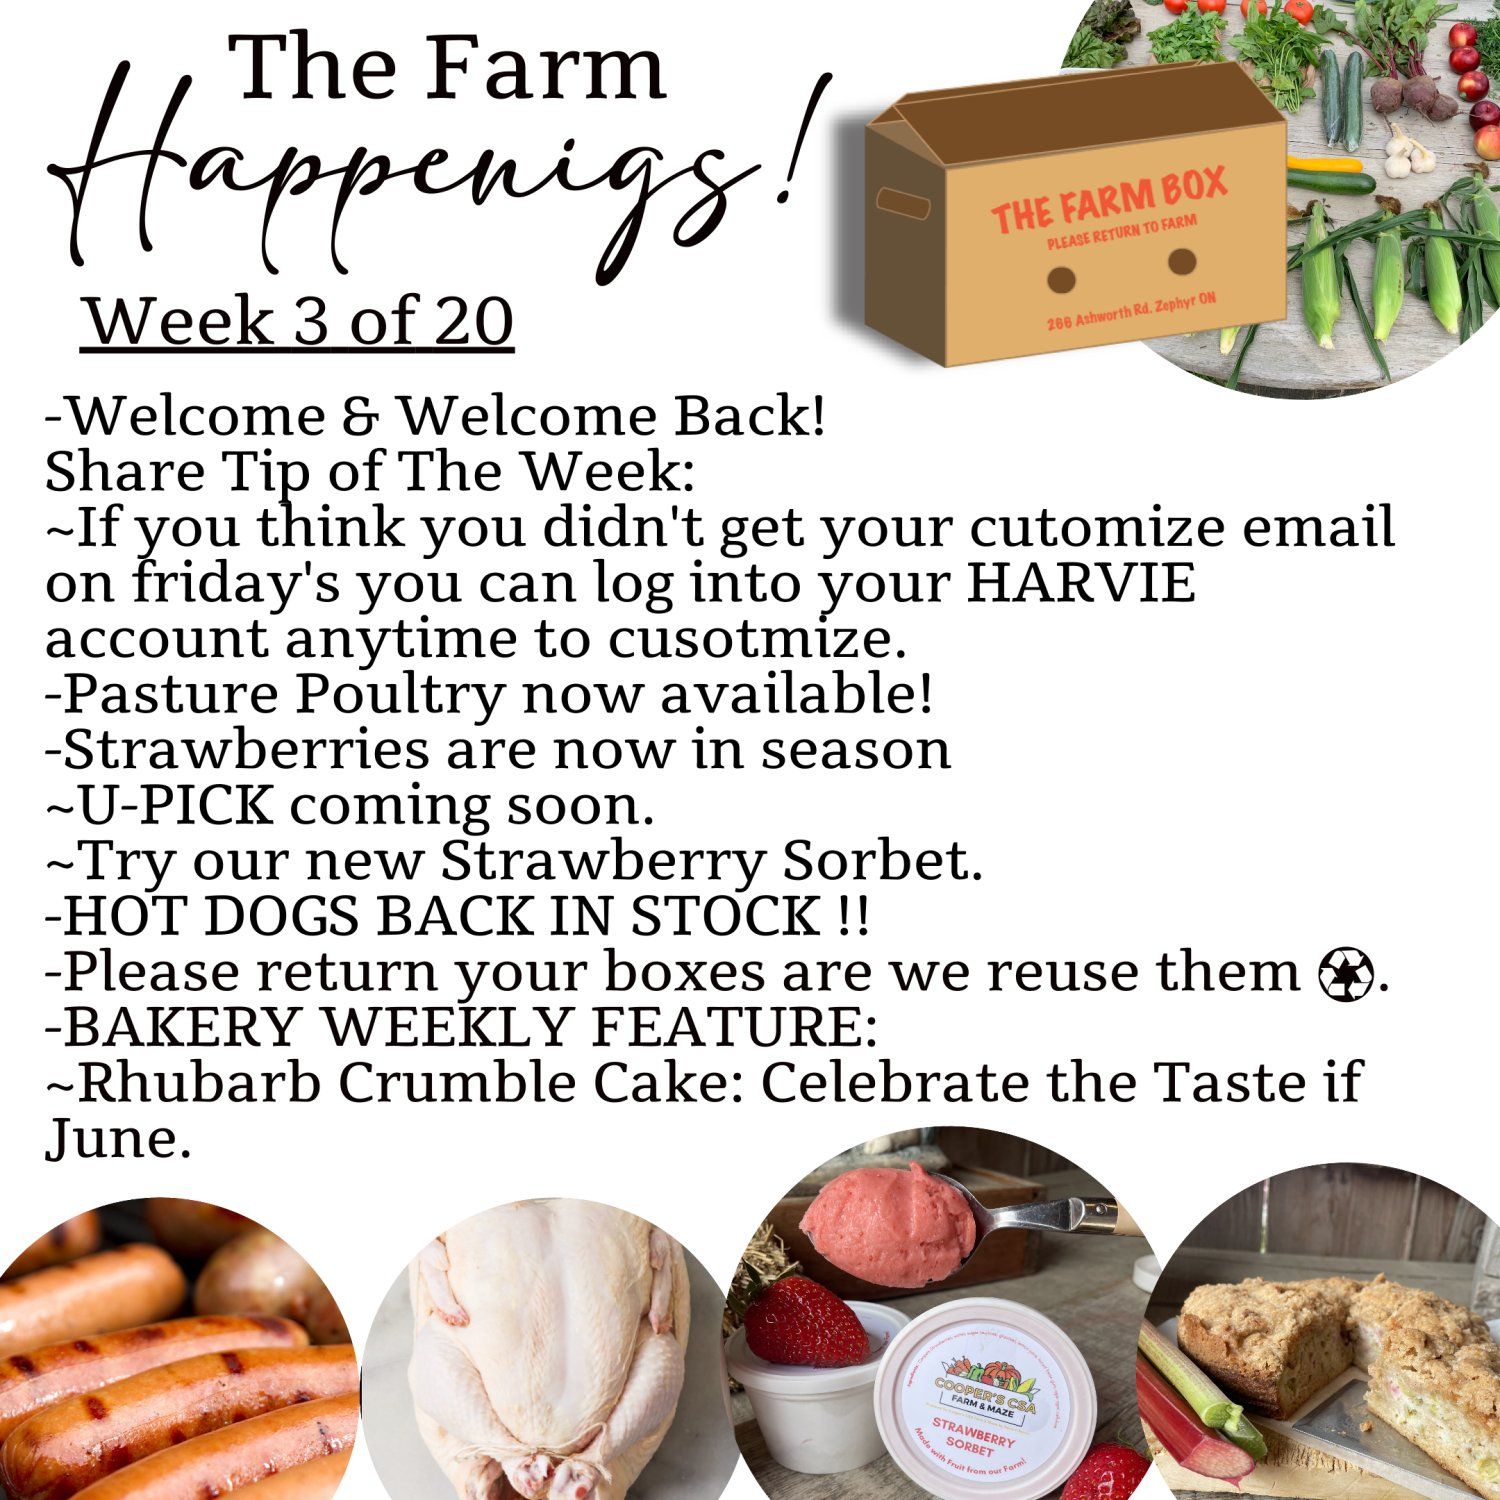 Previous Happening: "The Farm Box"-Coopers CSA Farm Farm Happenings Week 3 of 20